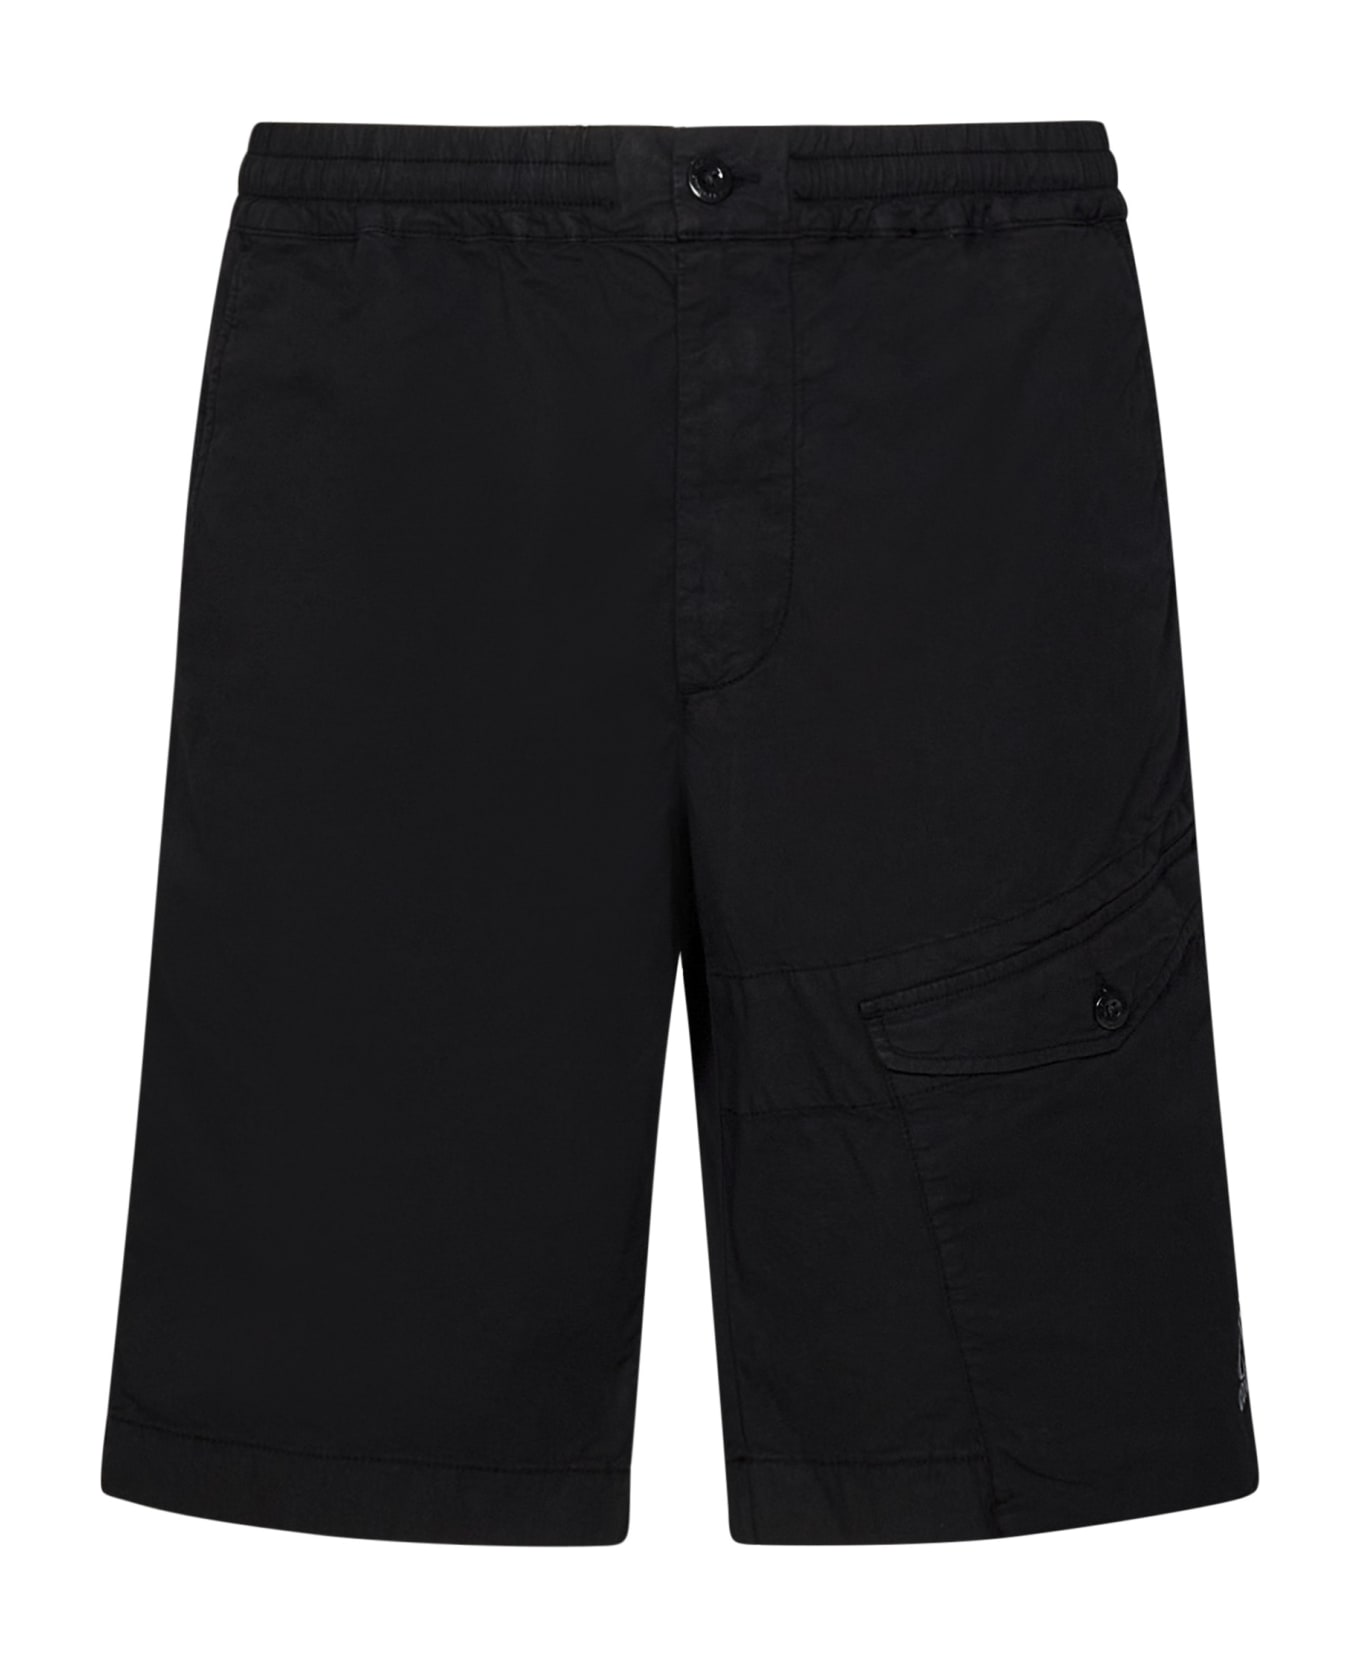 C.P. Company Shorts - Black ショートパンツ